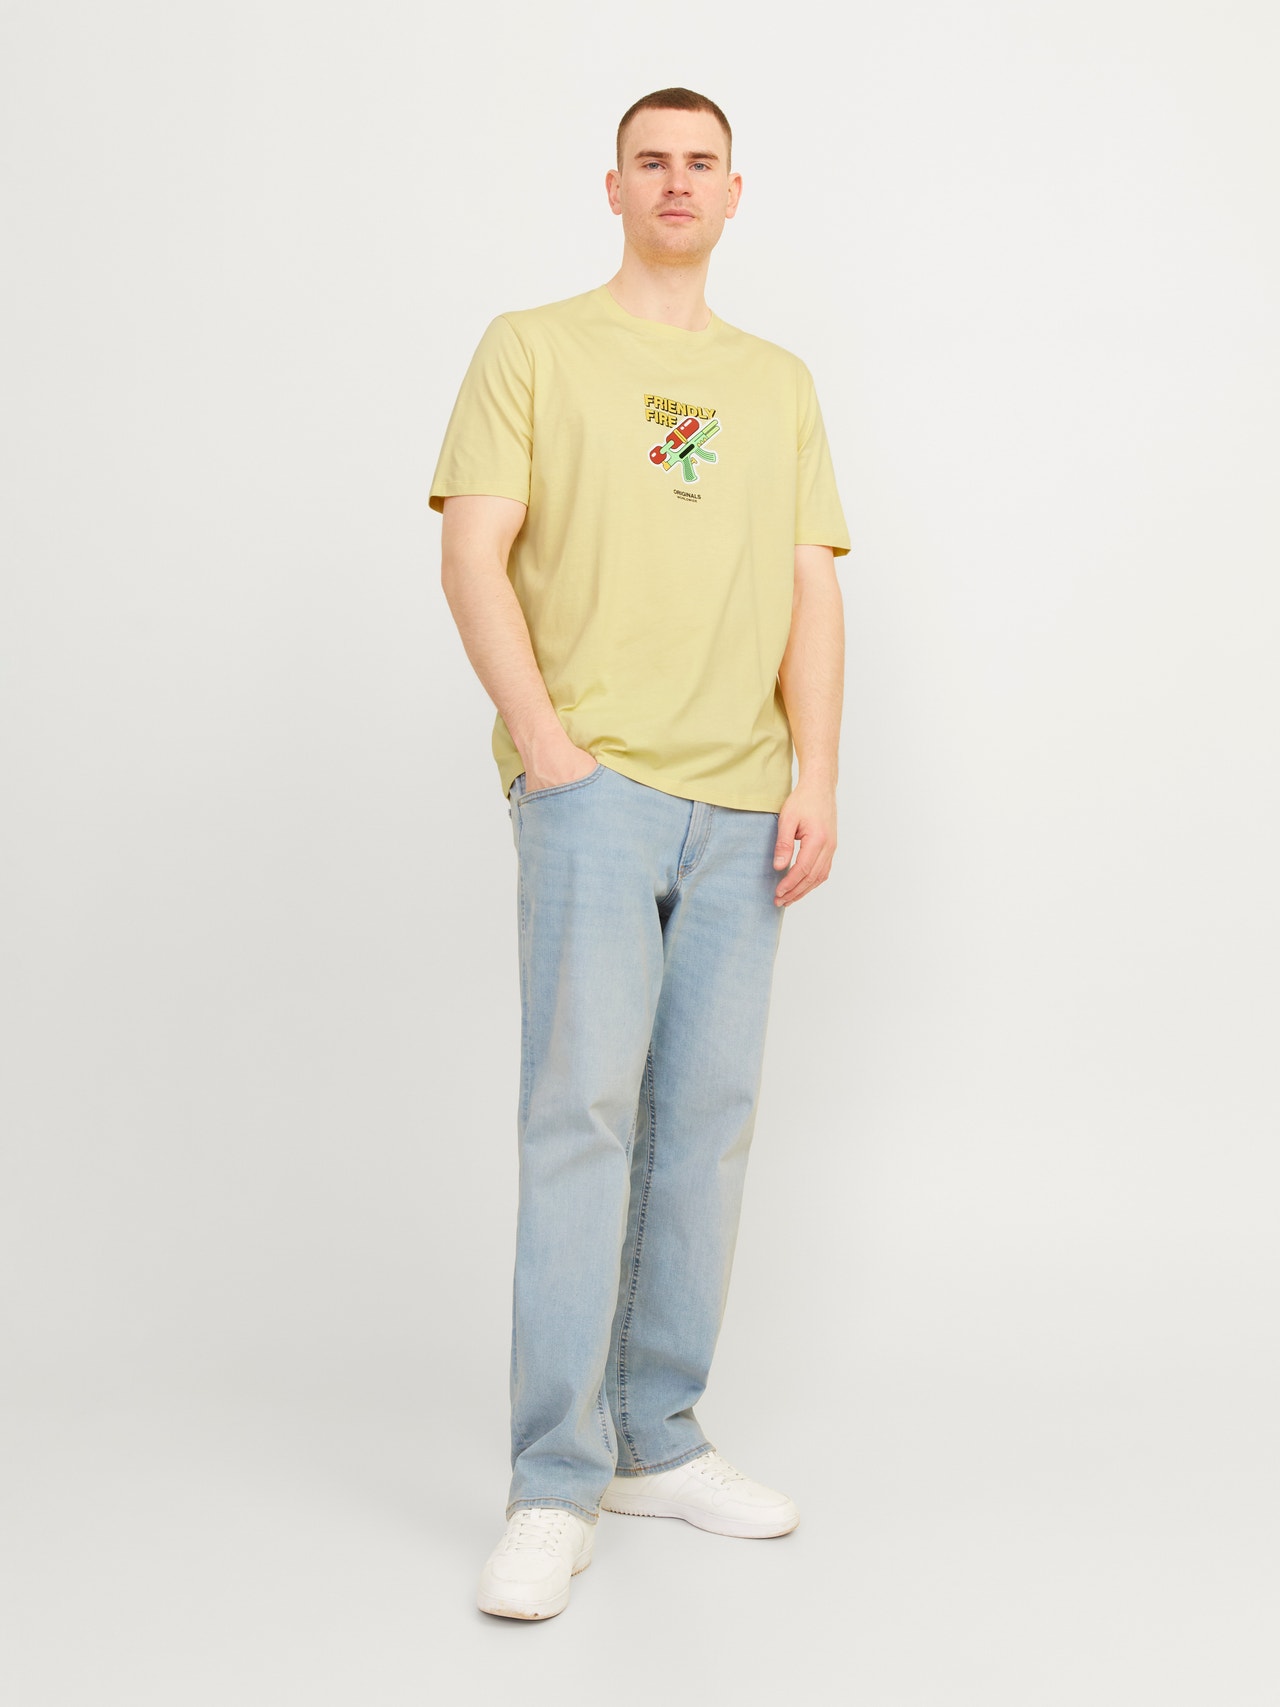 Jack & Jones Plus Size T-shirt Stampato -Italian Straw - 12257567